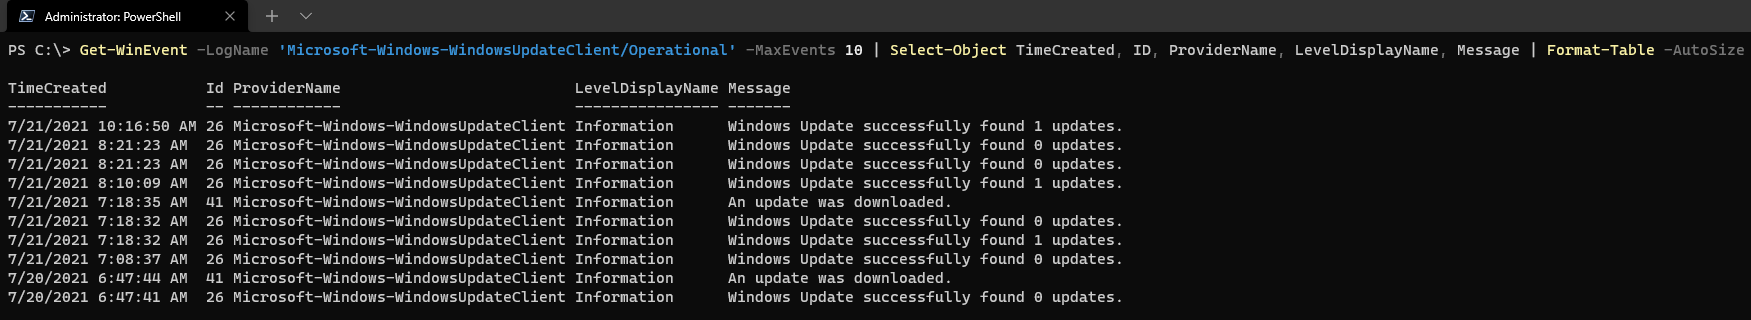 Returning Windows Event Log records.